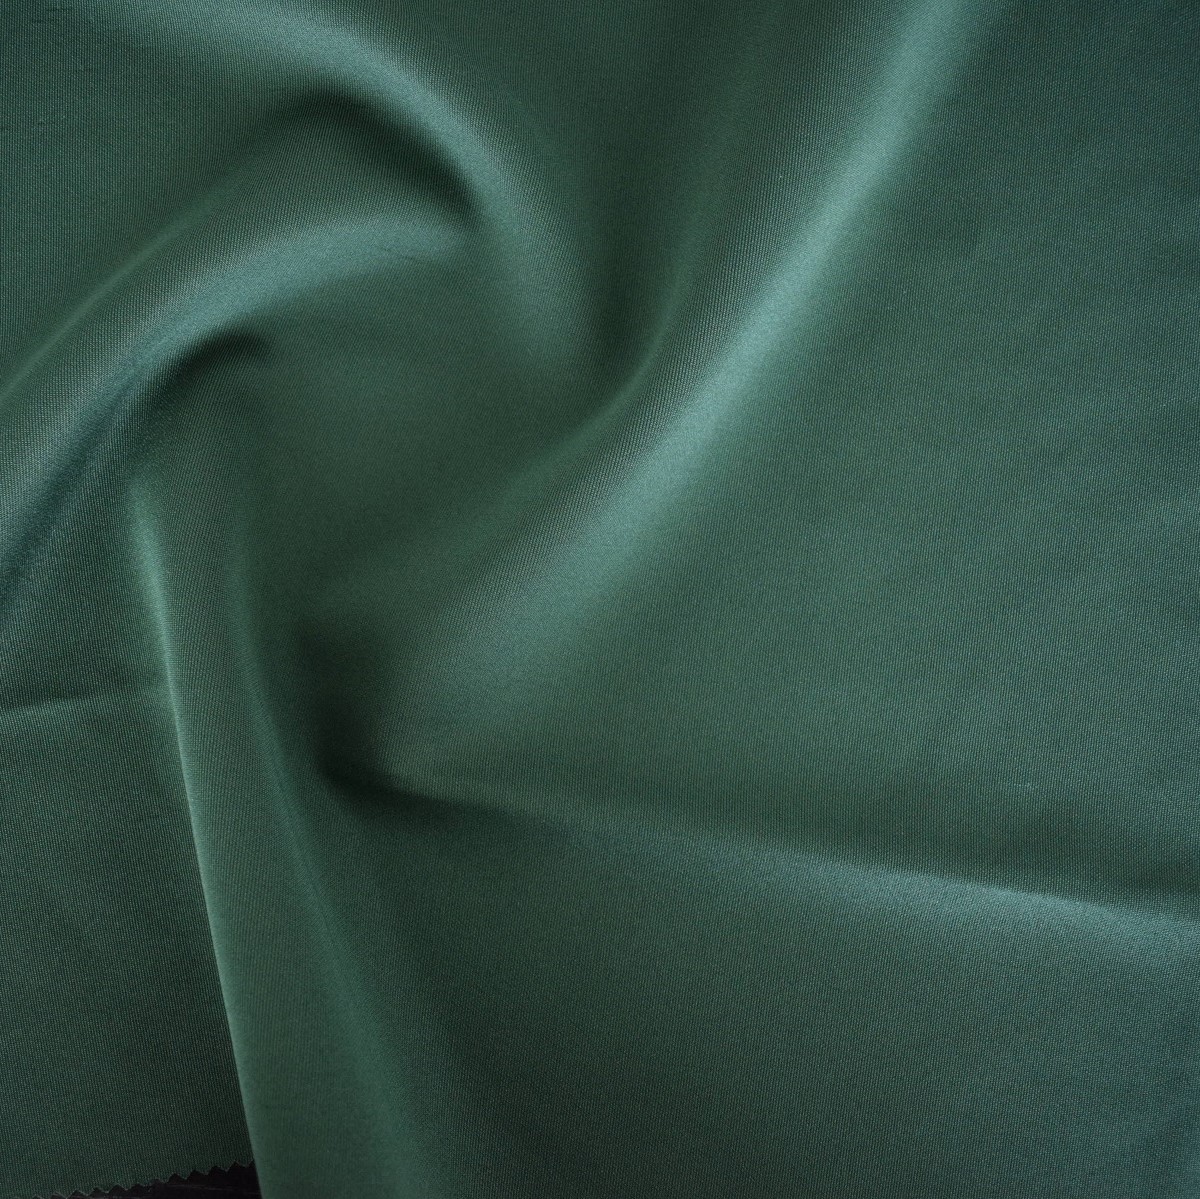 Air Layer Knitting Fabric